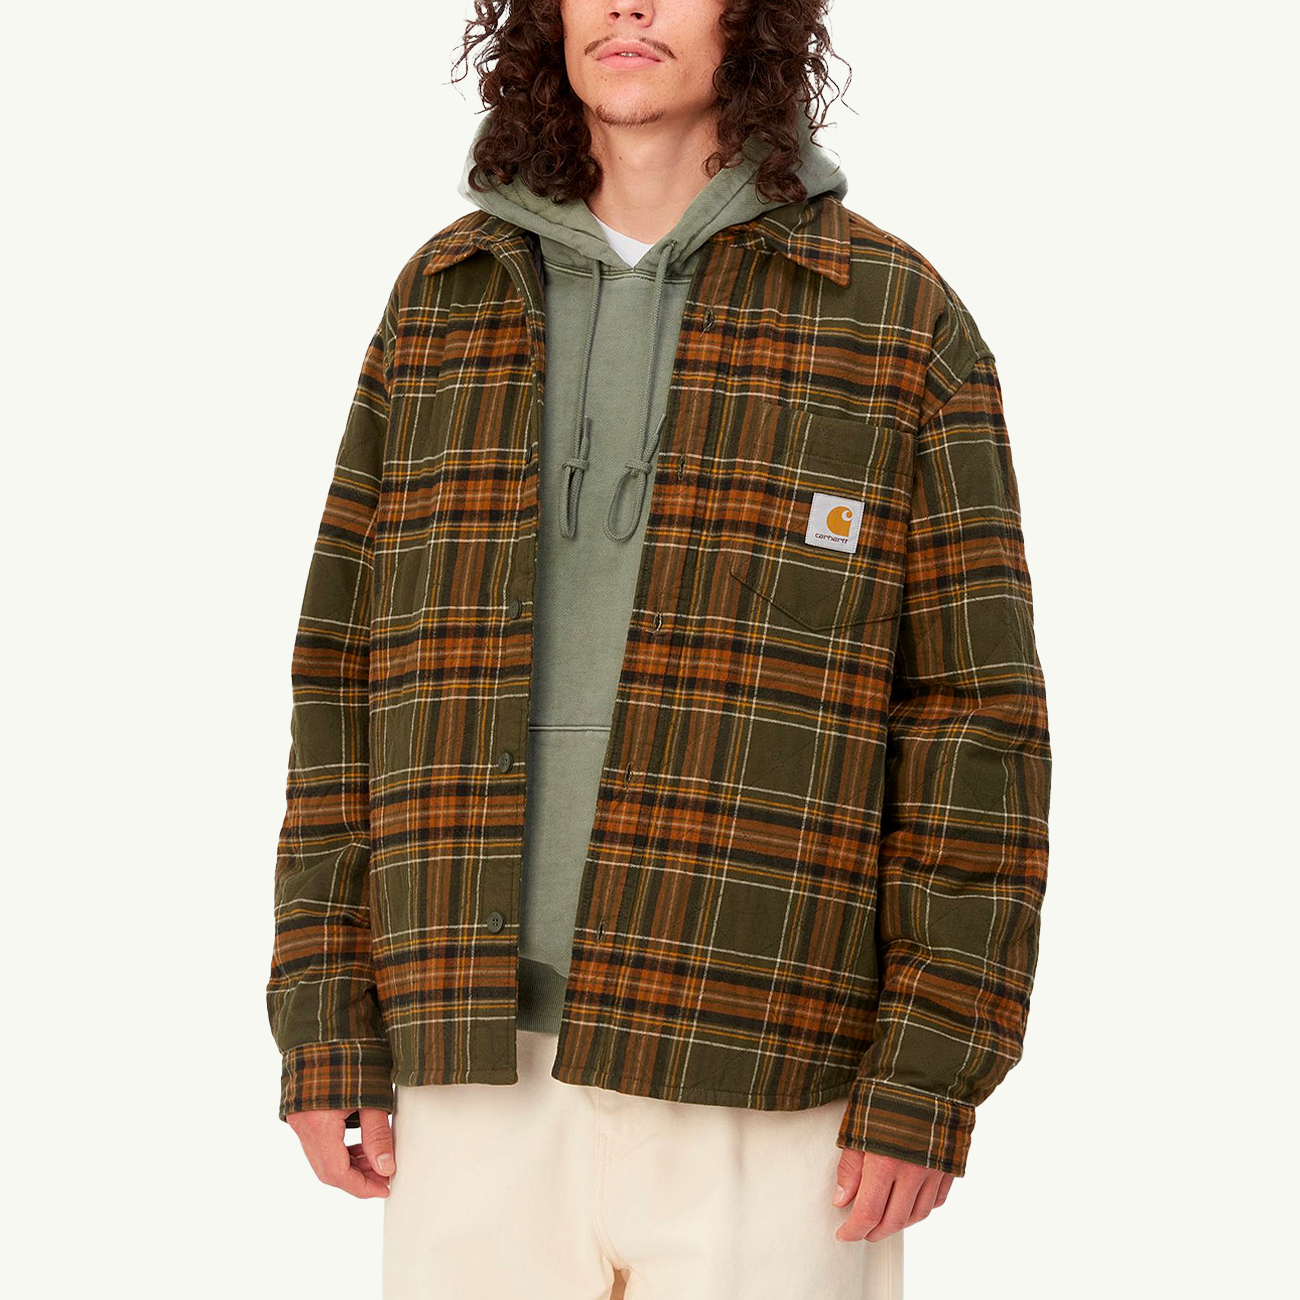 Wiles Shirt Jacket - Wiles Check/Highland